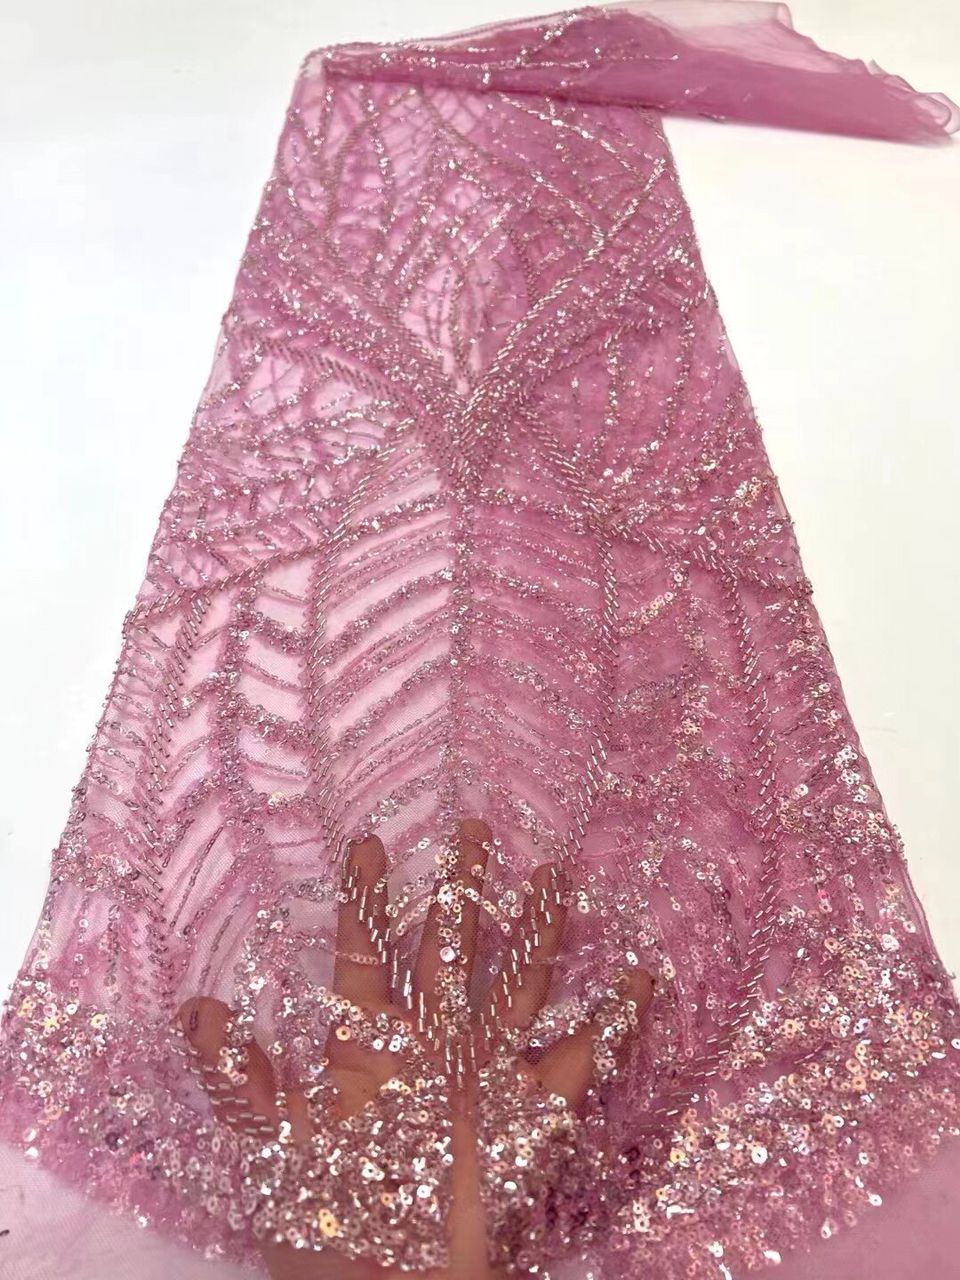 Myriad Sequin Fabric